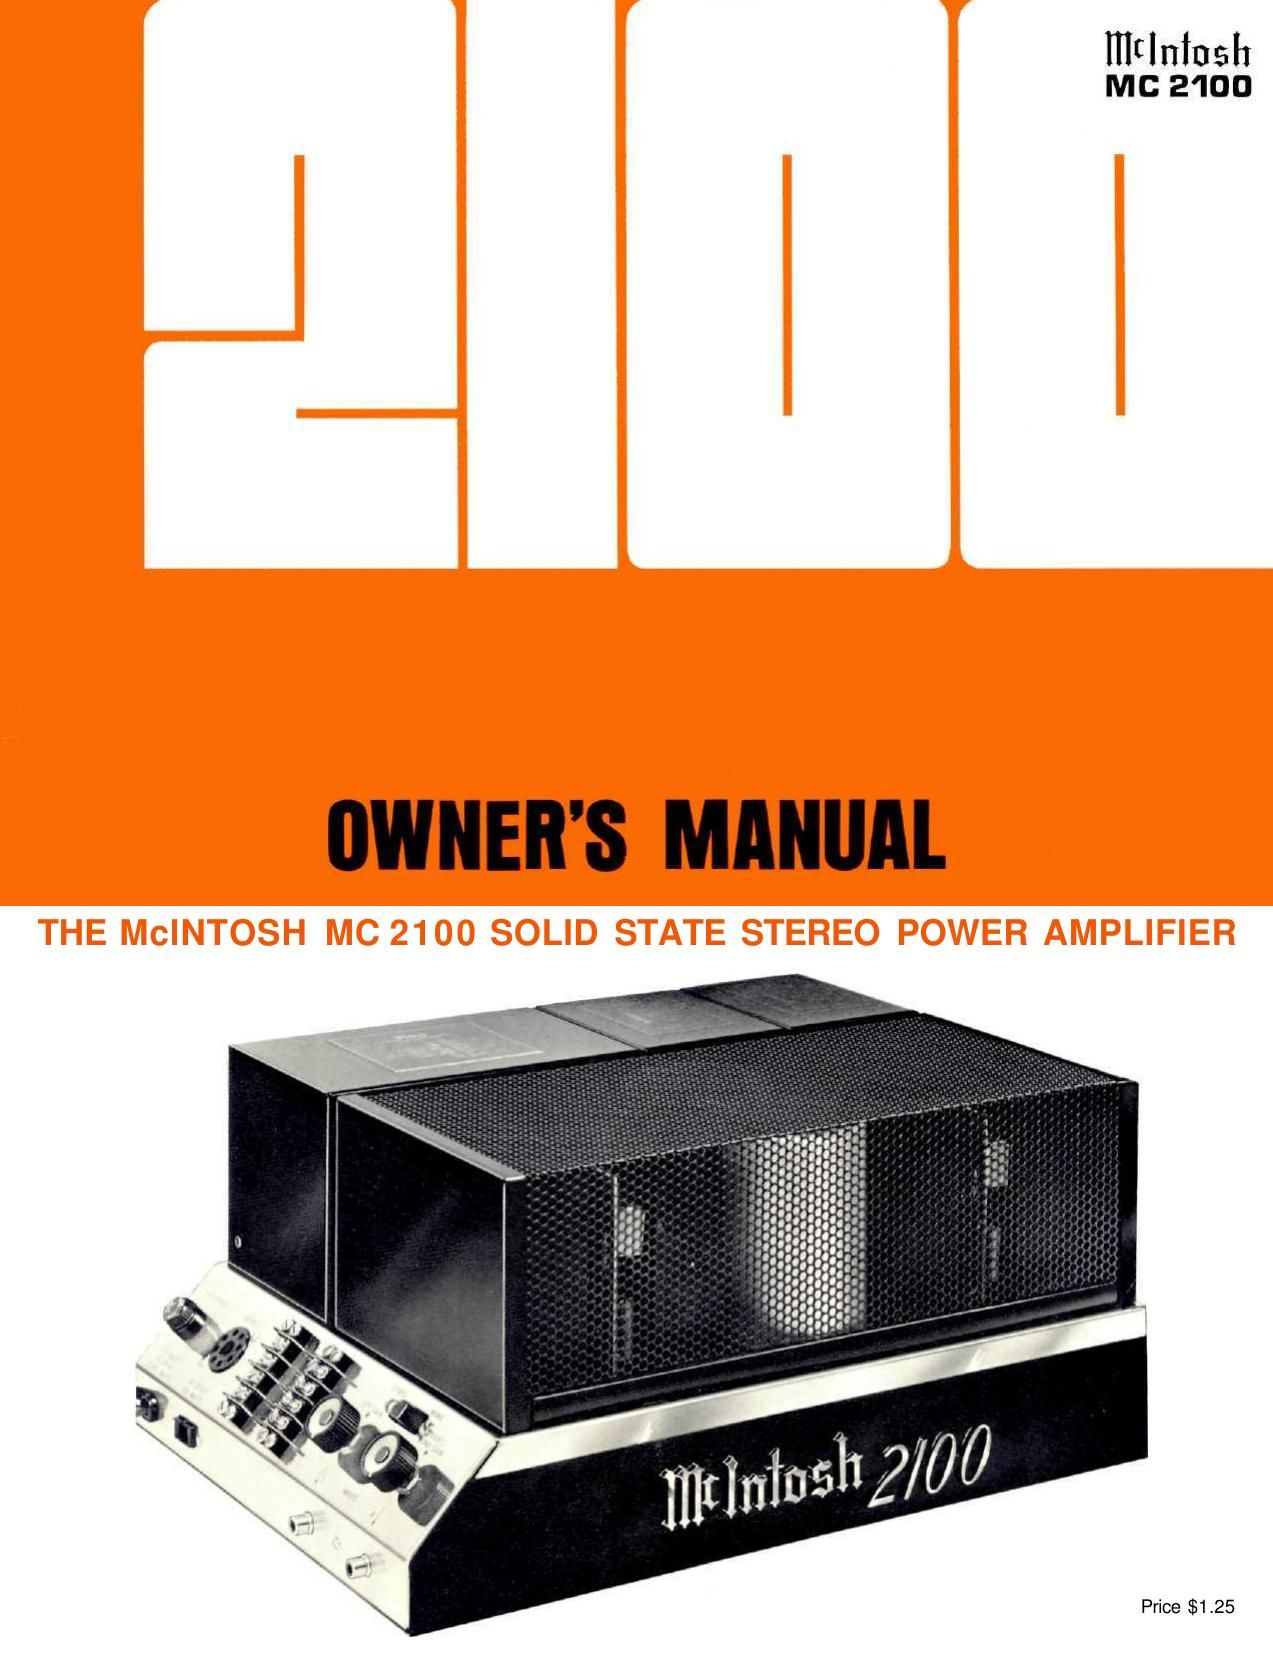 McIntosh MC 2100 Owners Manual